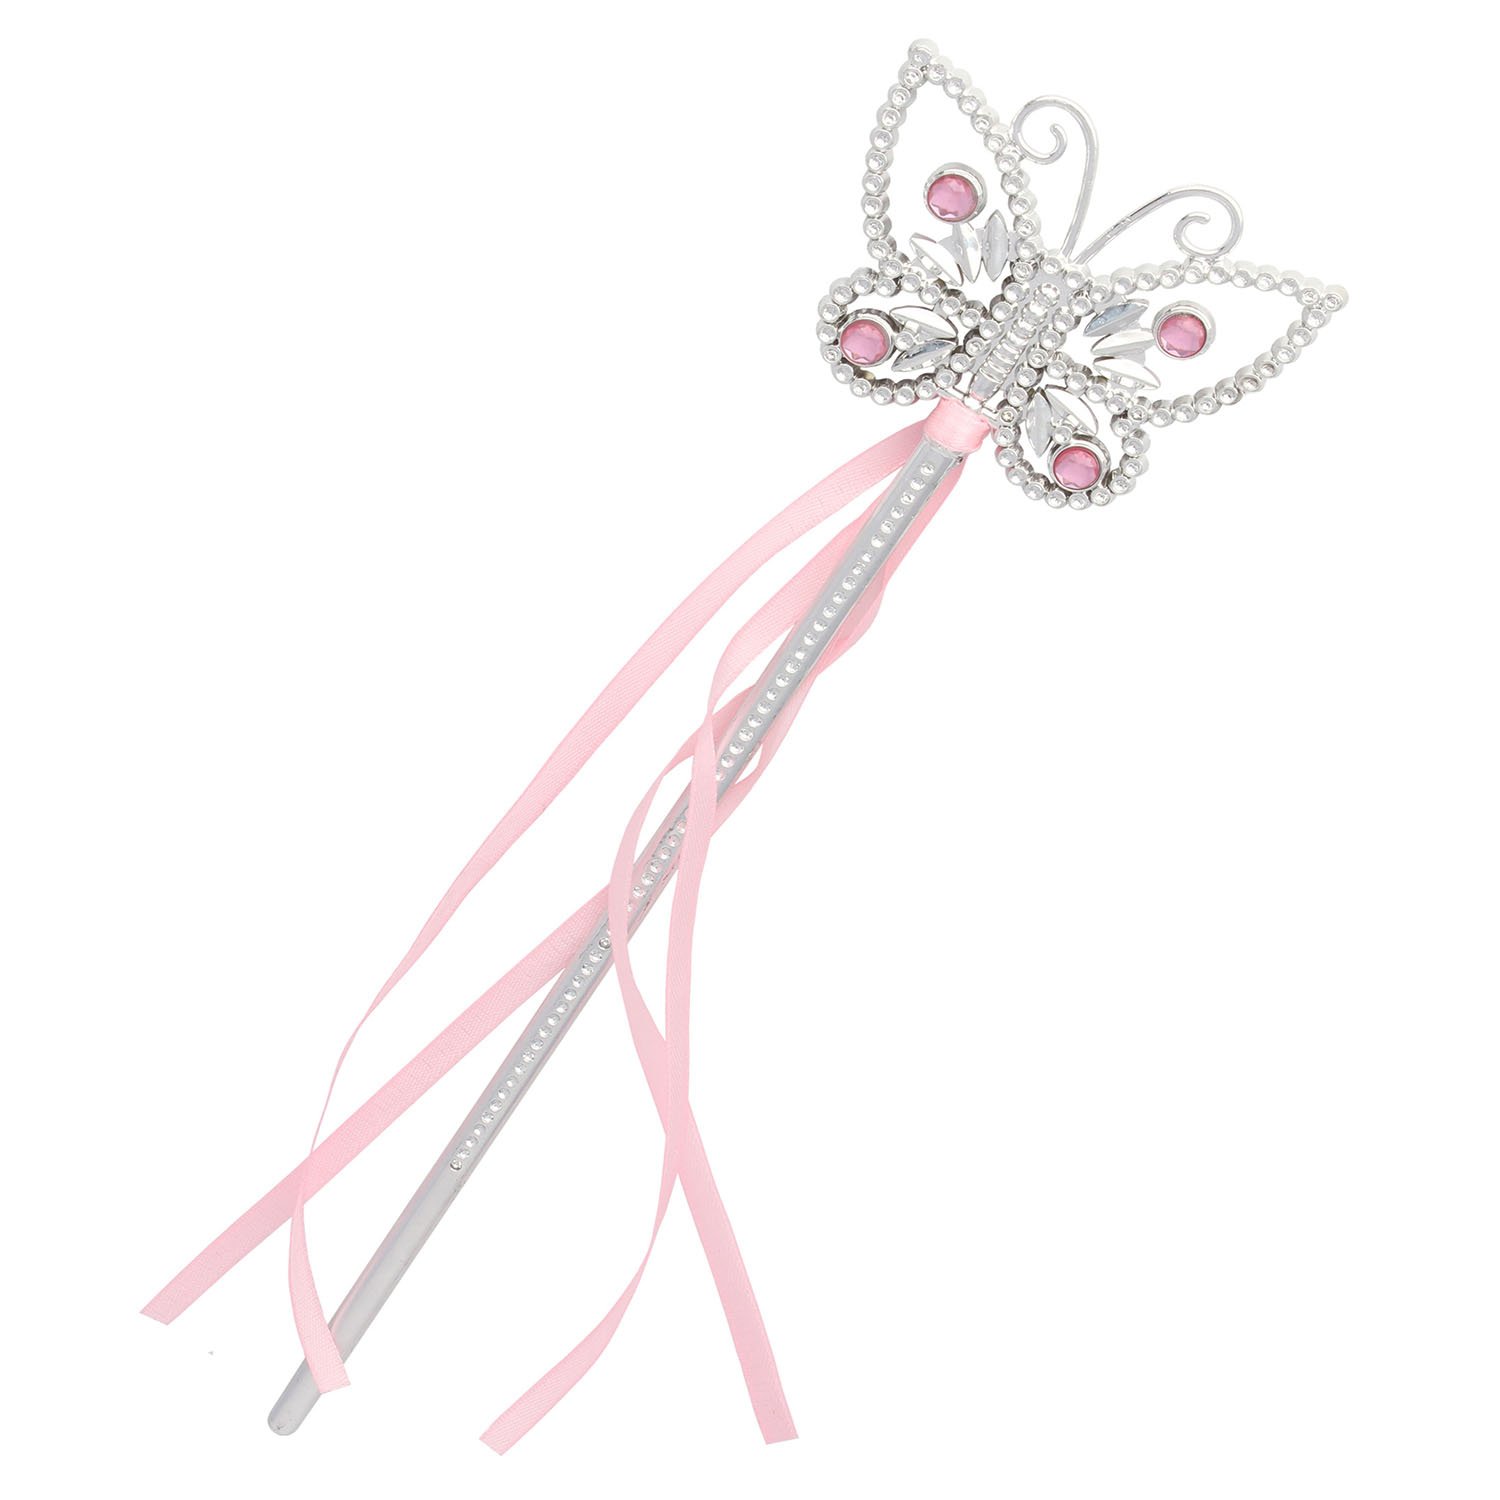 XiangGuanQianYing Princess Dress Up Princess Wands Tiaras and Crowns for Little Girls Butterfly Wand Set Pink